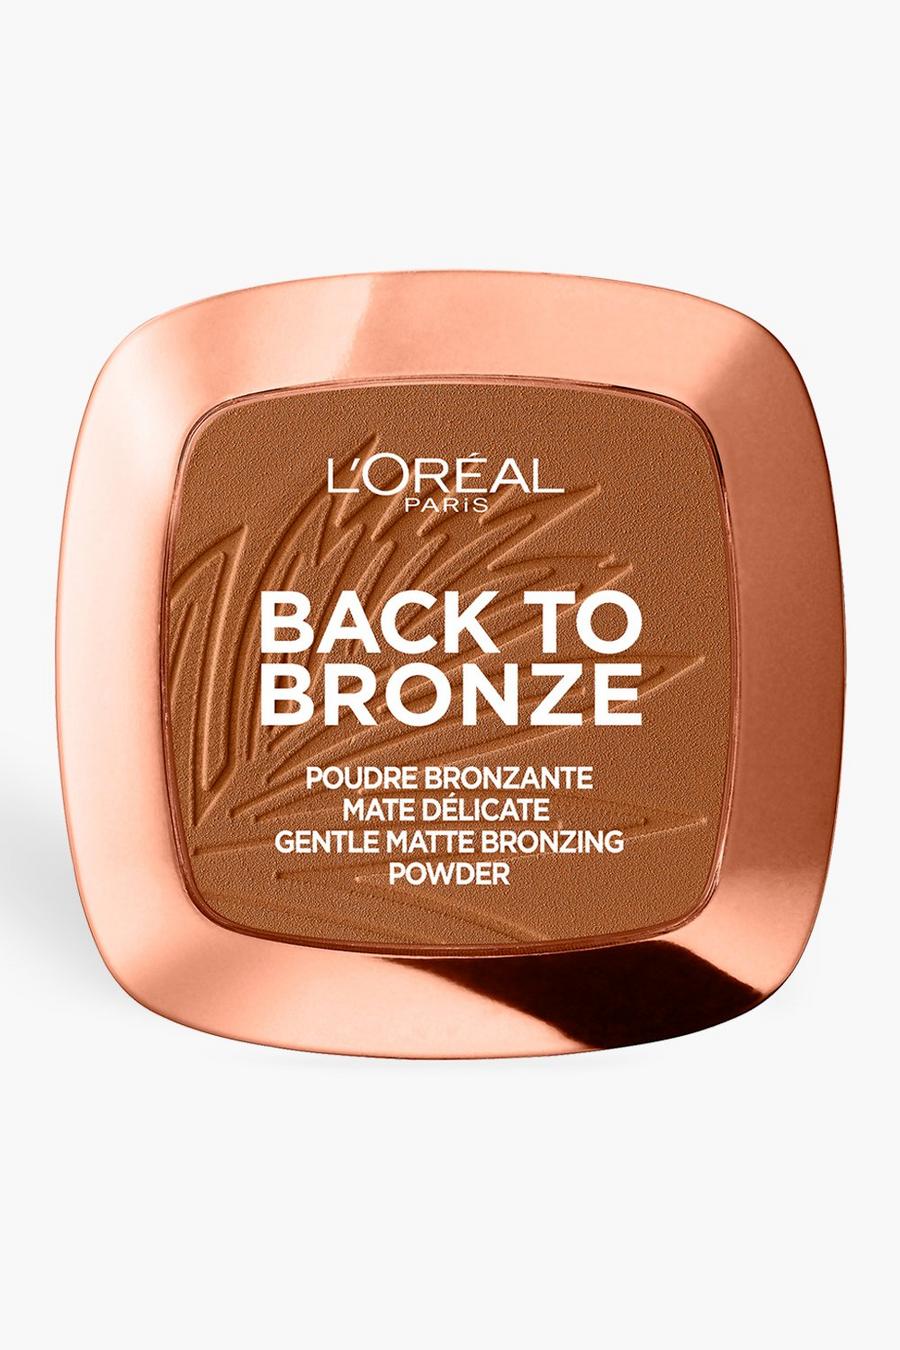 L'Oréal Paris Bronzer - Back To Bronze Matte Bronzing Pressed Powder, Medium